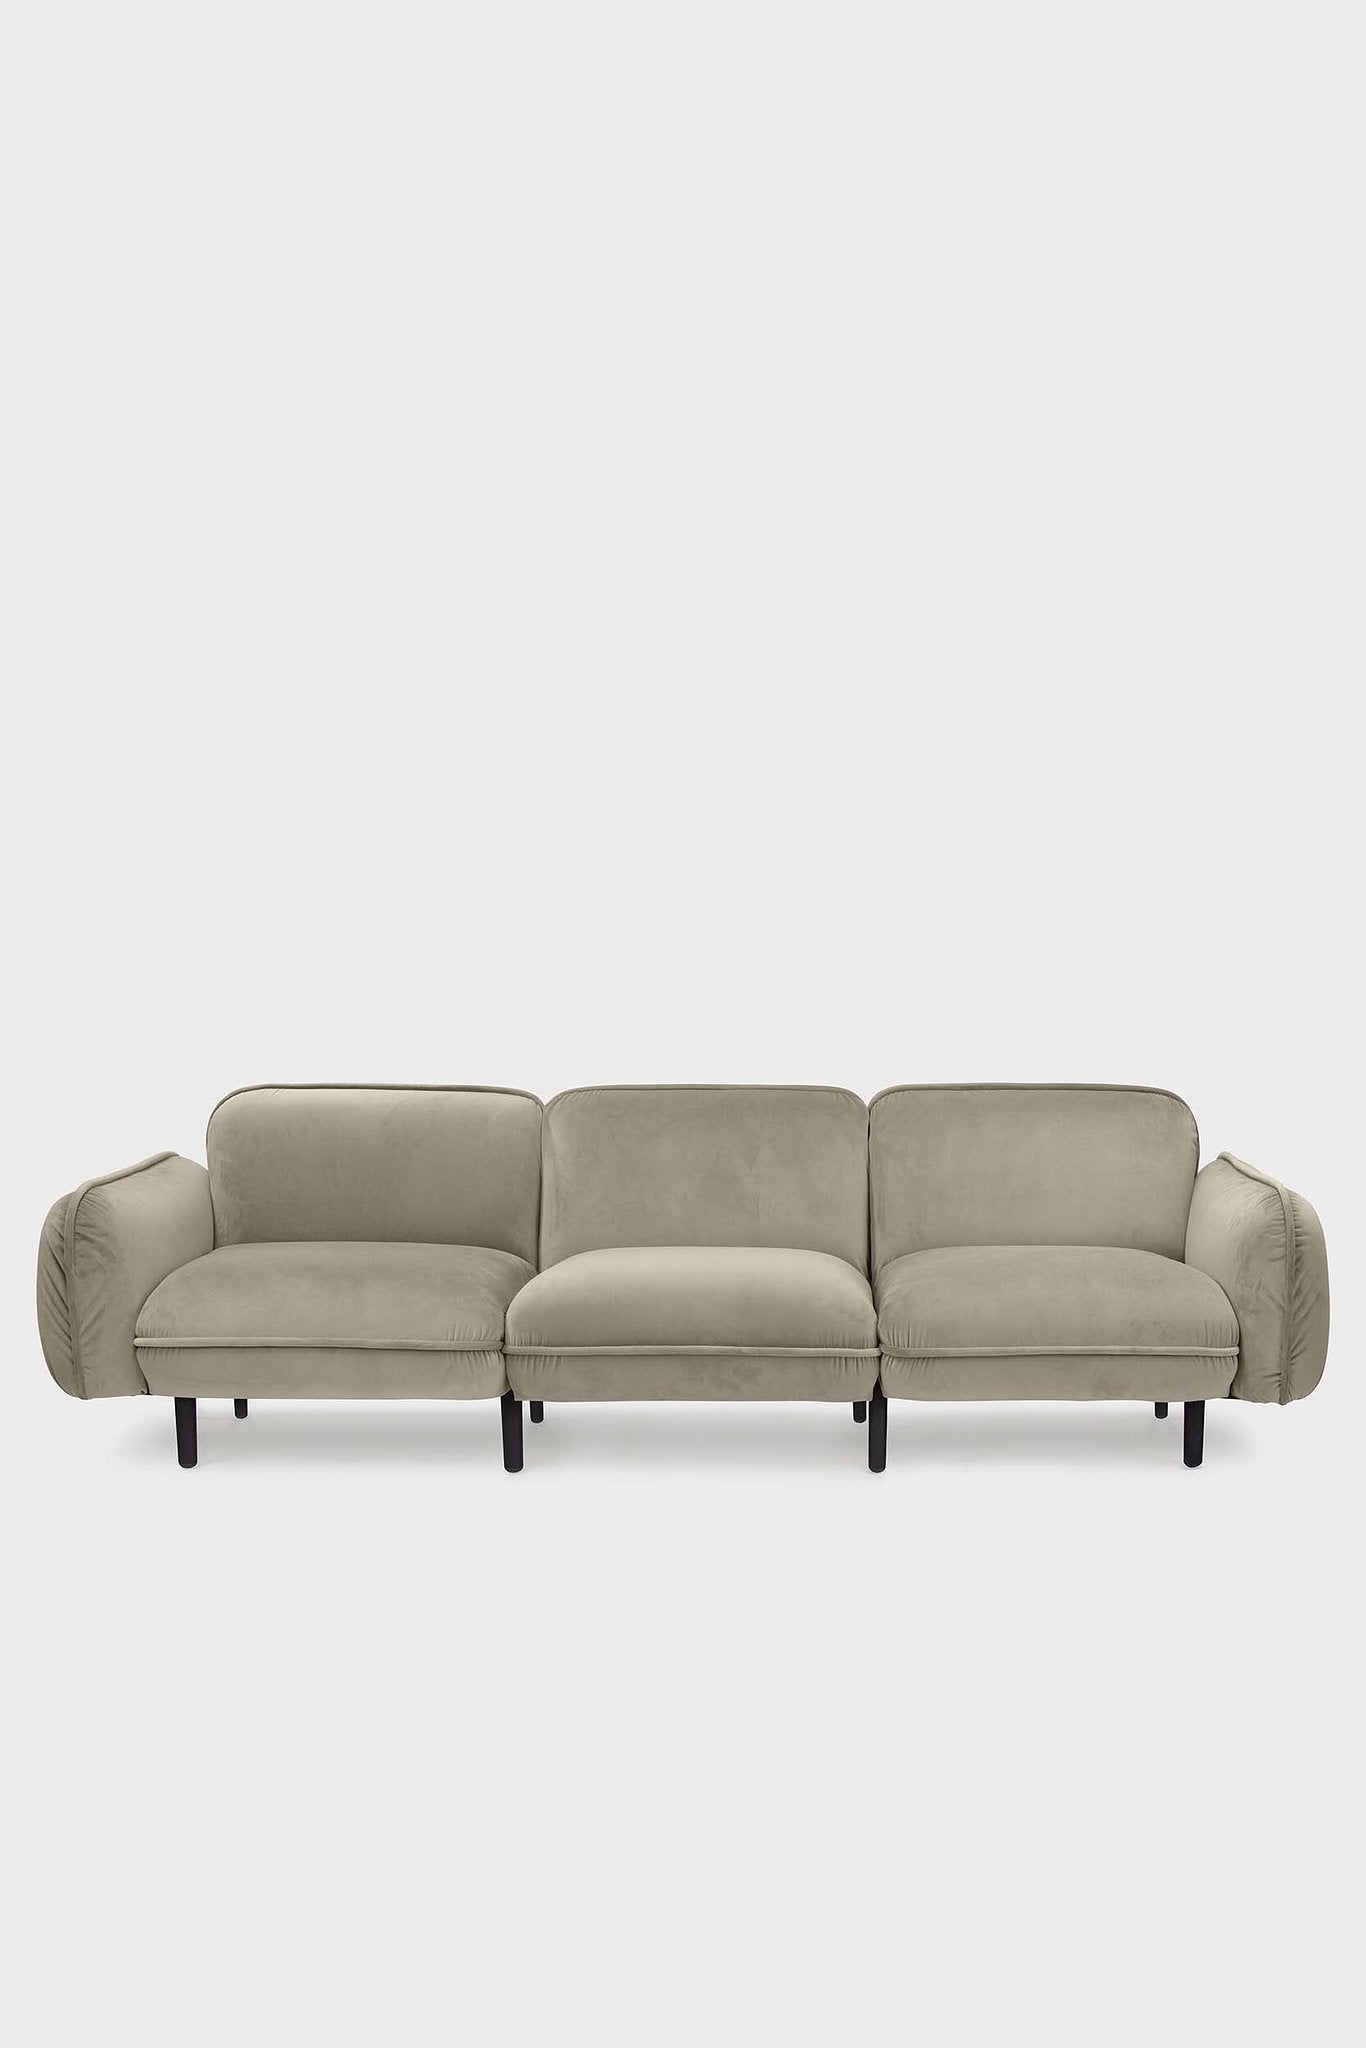 EMKO Bean Sofa 3-Seater / Brown Choco / Boucle fabric